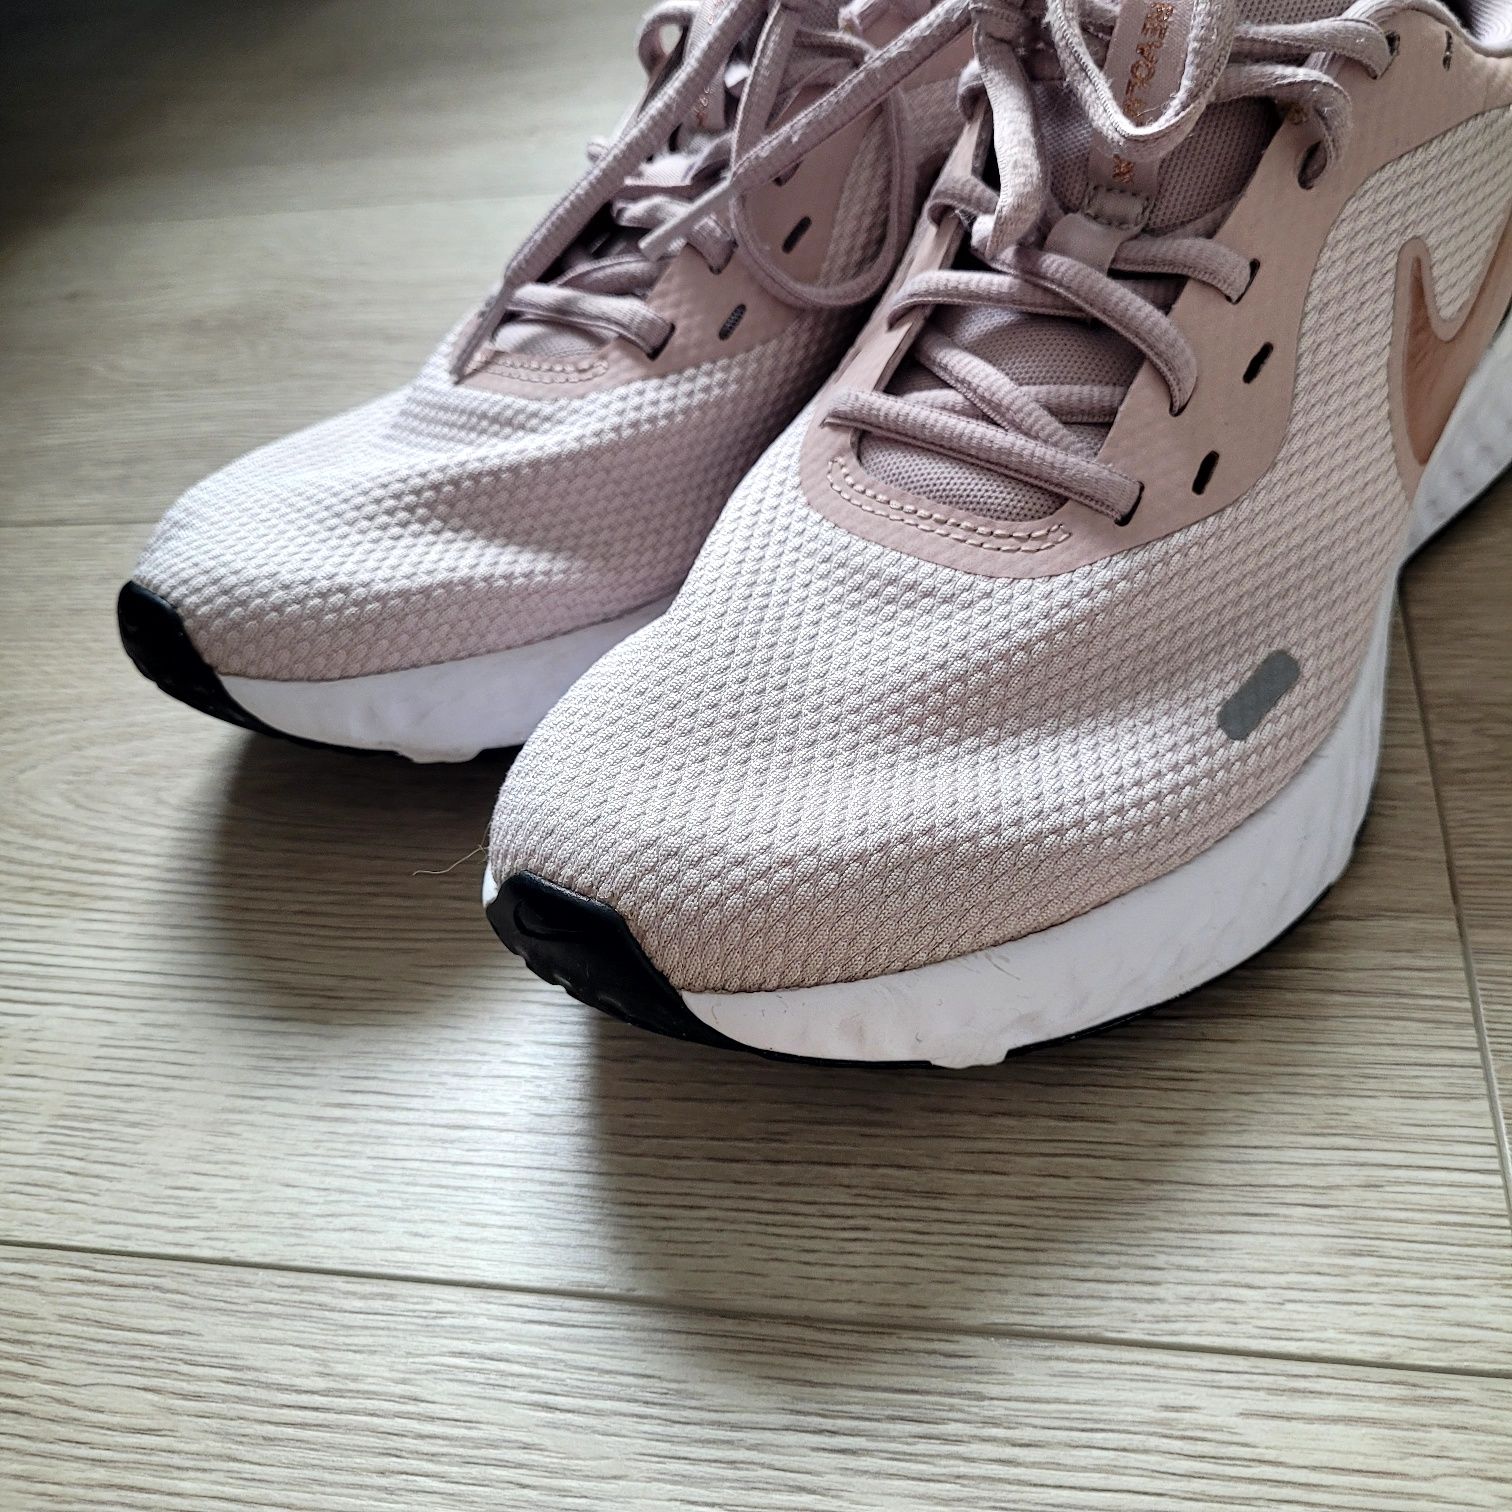 Buty damskie Nike revolution 5 pink rozm.41